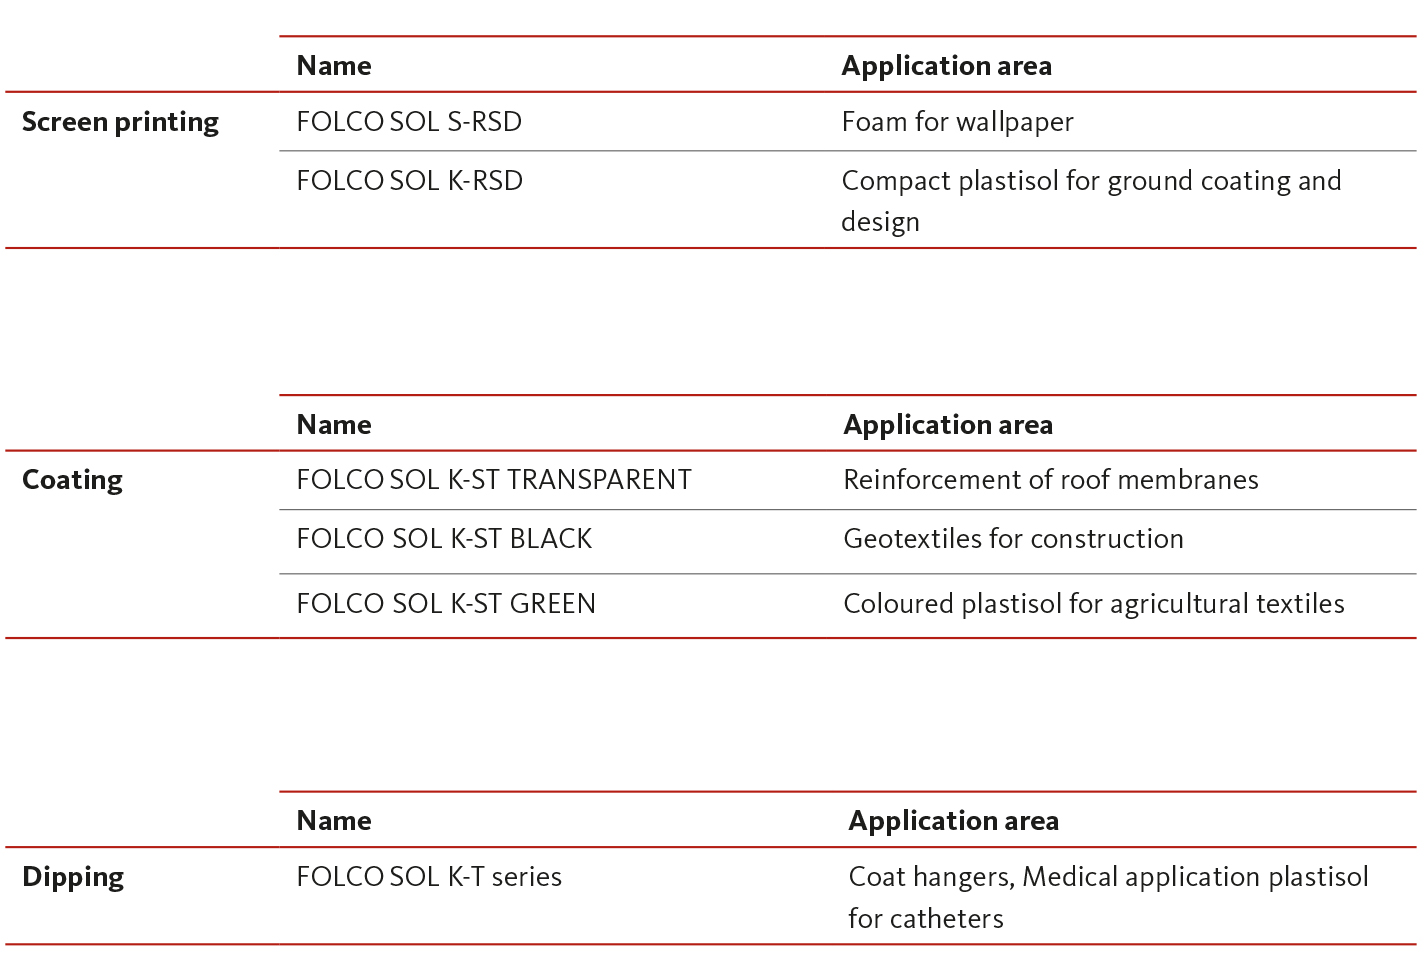 Plastisols for various applications